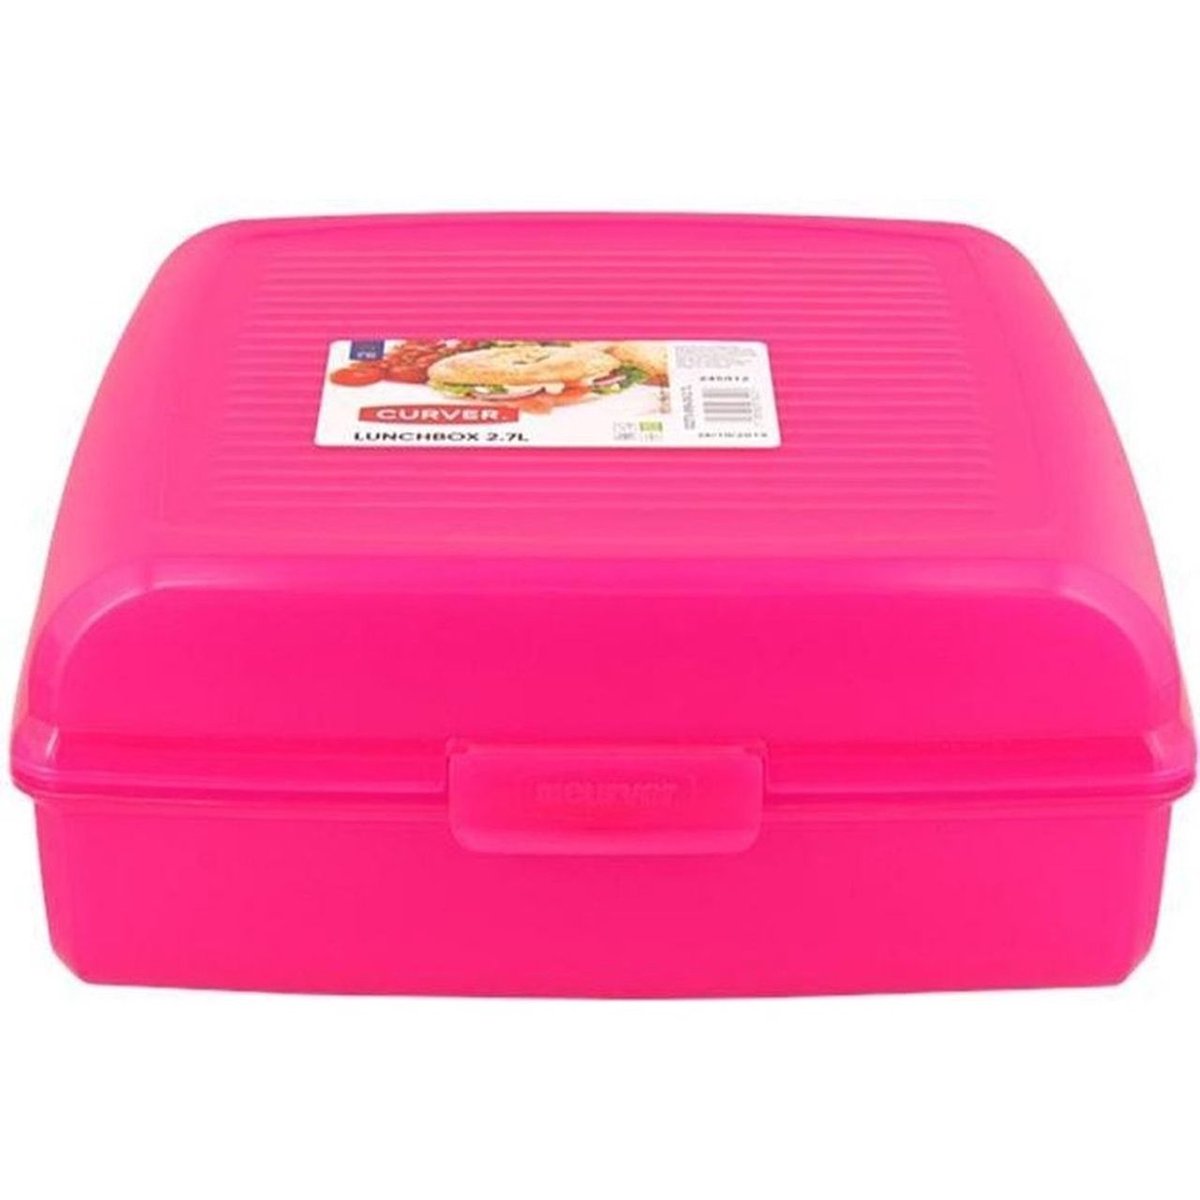 Keelholte kleur Stationair Curver Lunchbox - Broodtrommel - Roze - Kunststof - XL | bol.com